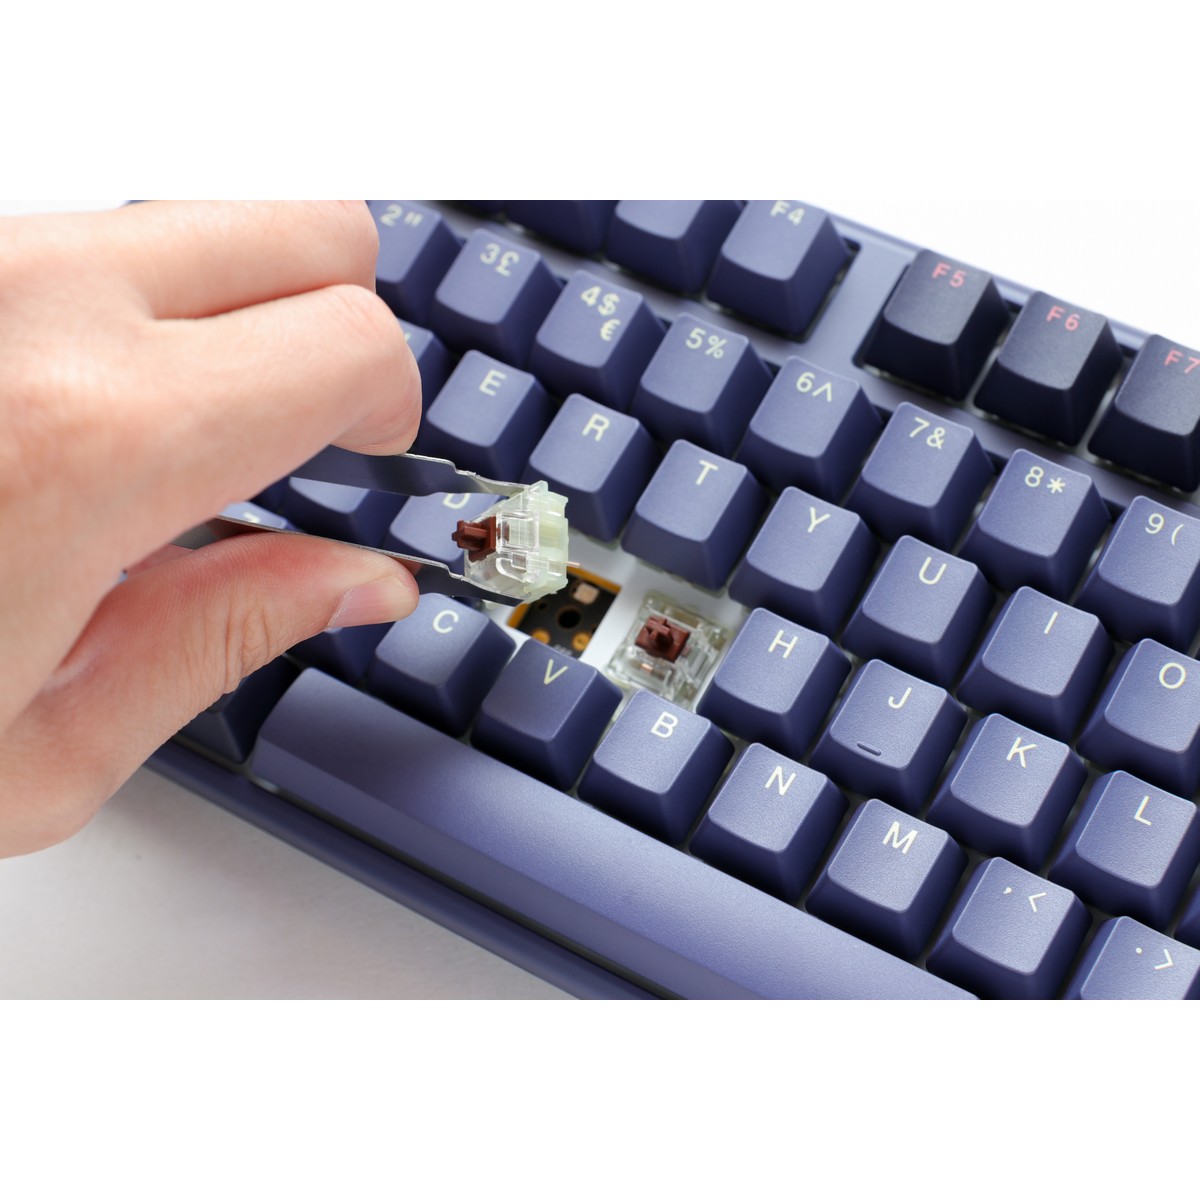 Ducky - Ducky One 3 Cosmic TKL 80% USB RGB Mechanical Gaming Keyboard Cherry MX Speed Silver Switch - UK Layout